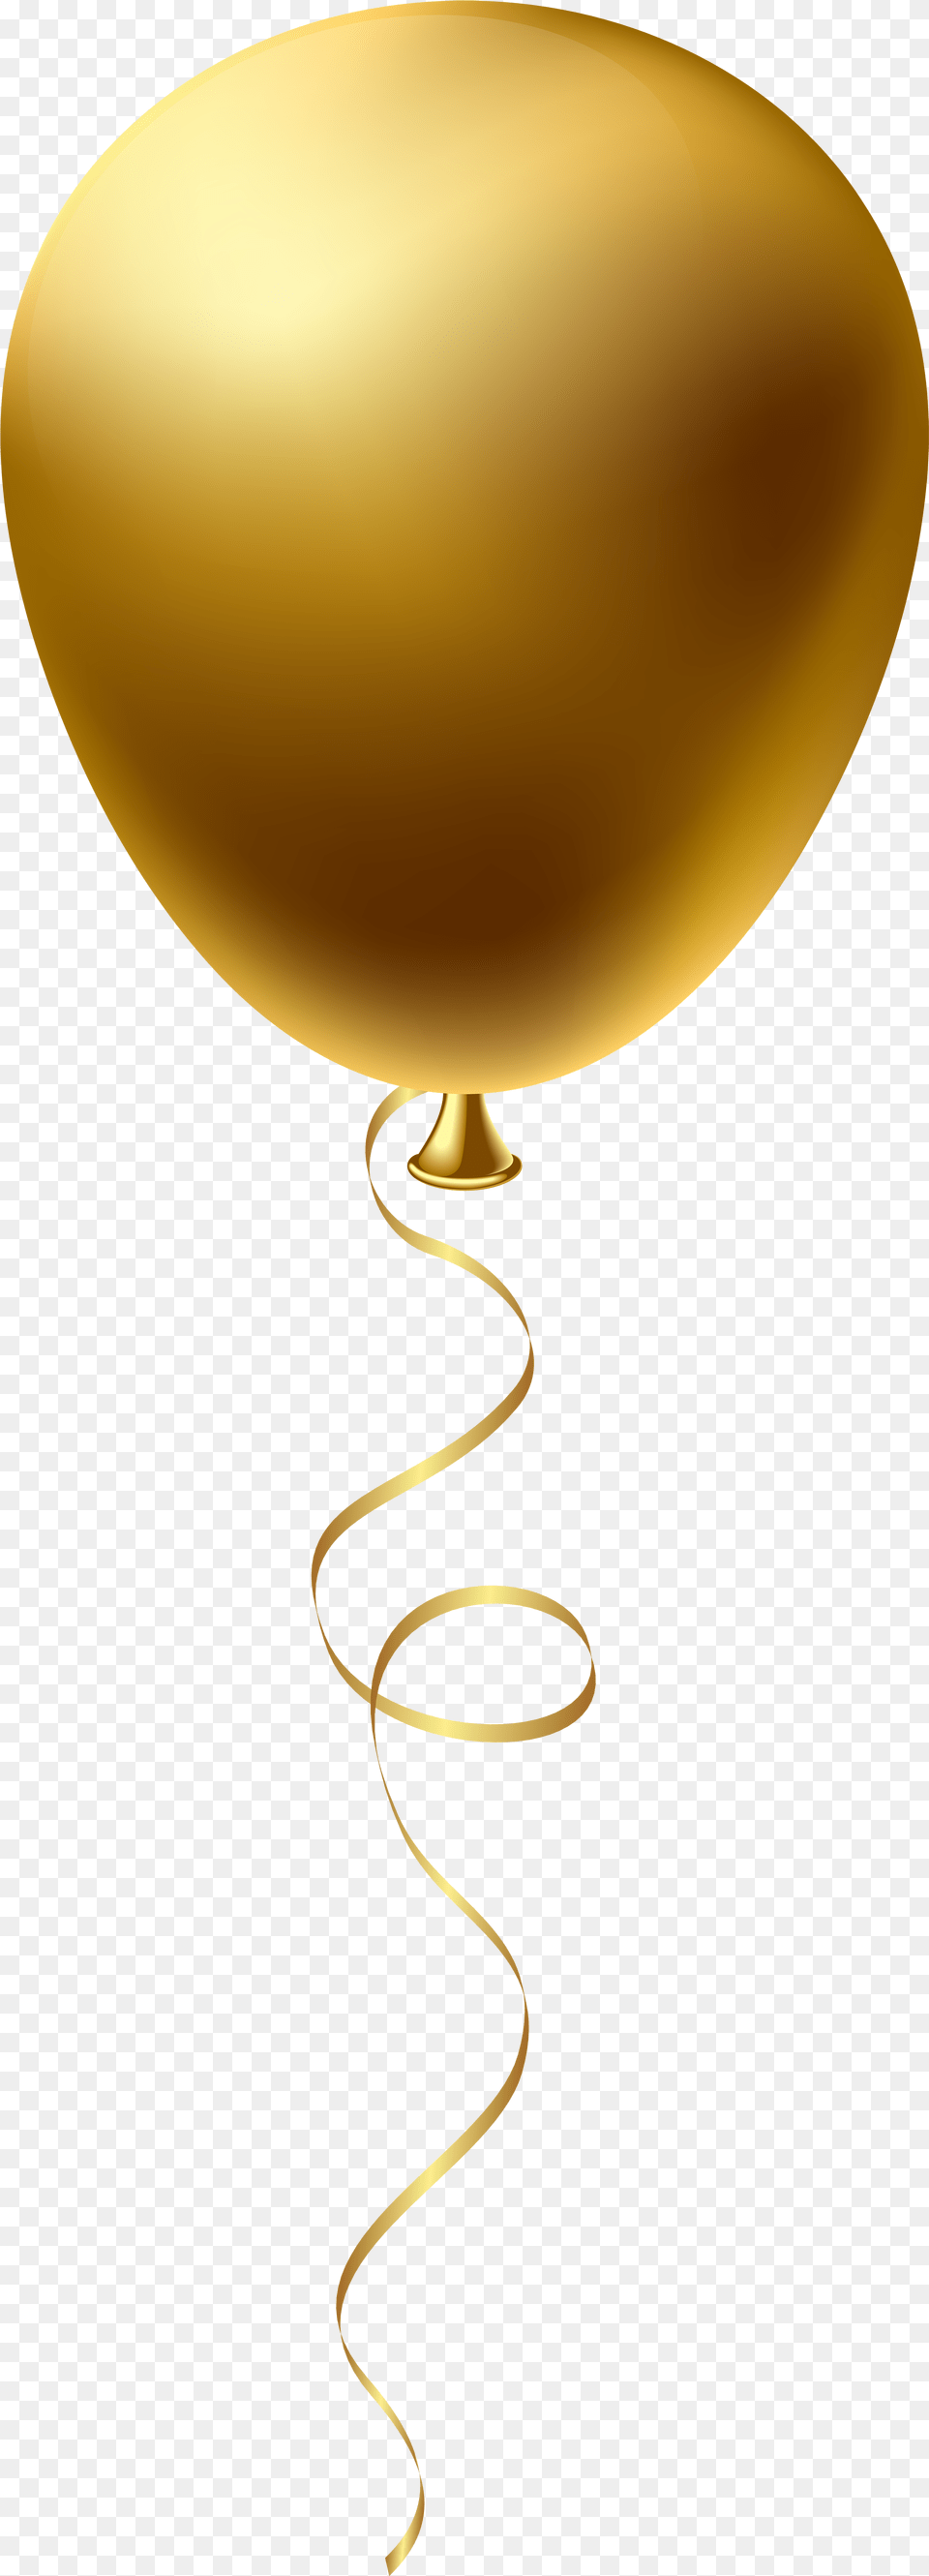 Gold Balloons Gold Balloons, Balloon, Lighting, Astronomy, Moon Png